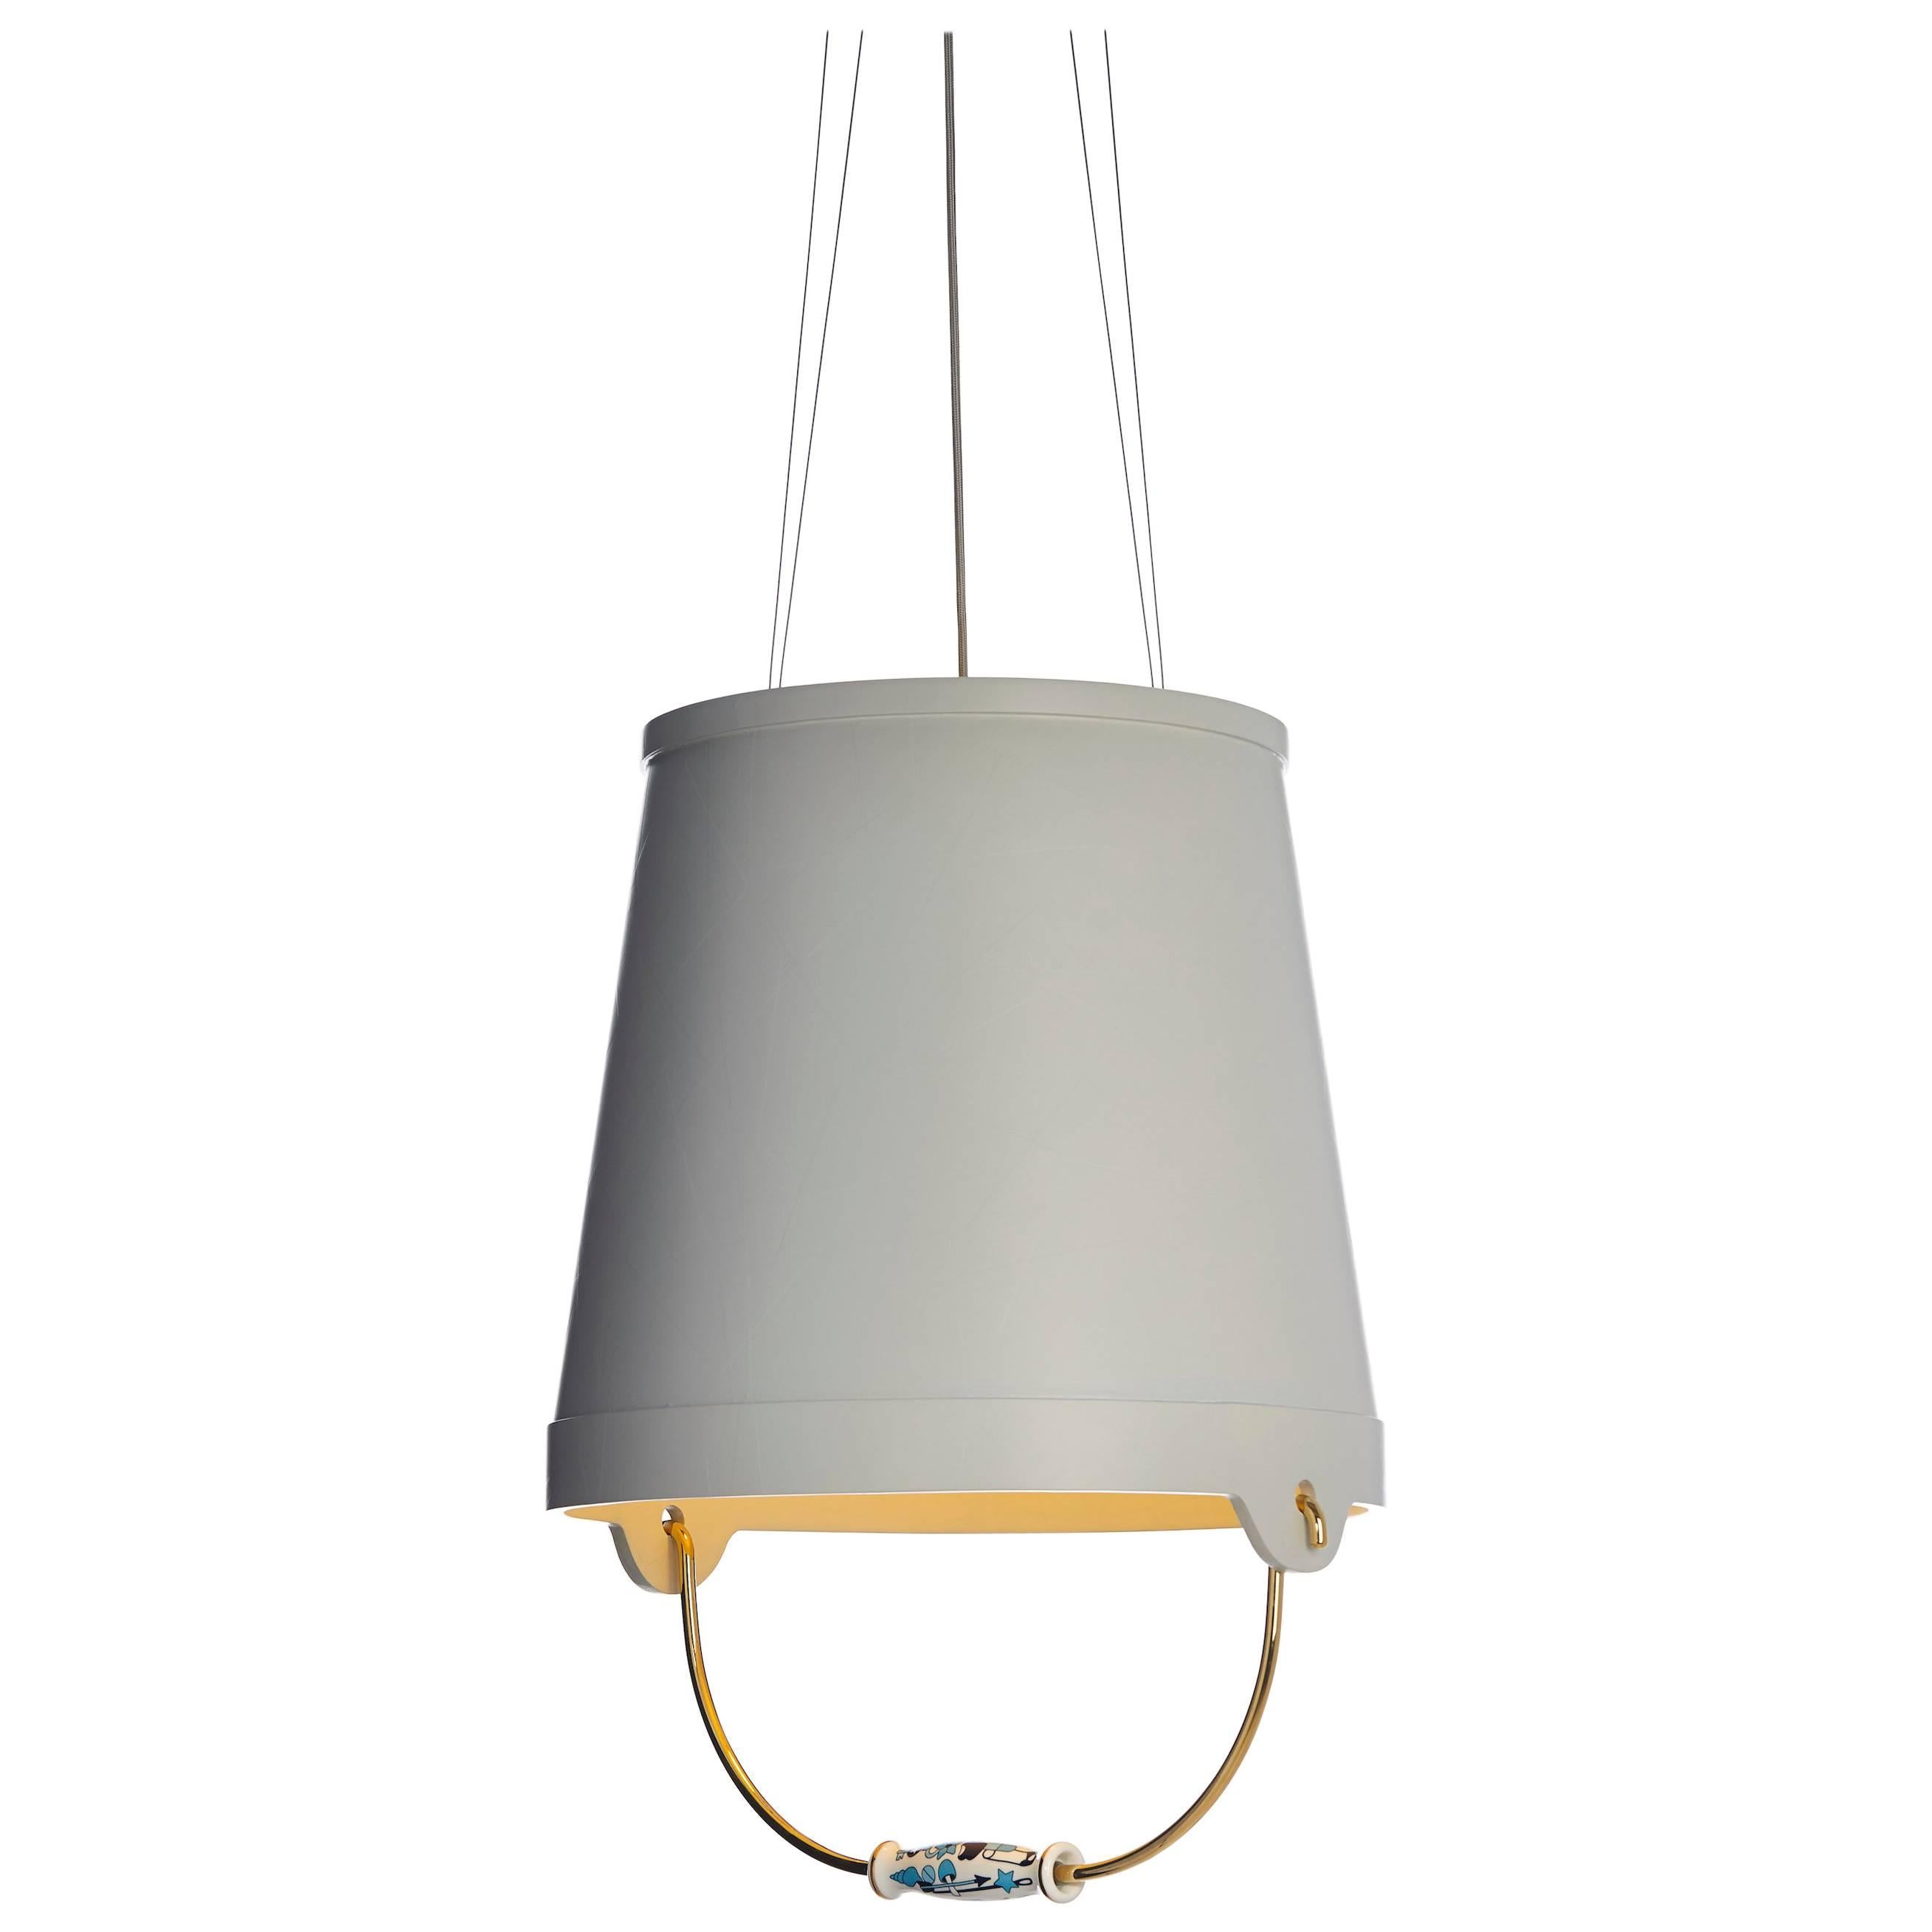 Moooi Bucket Suspension Lamp by Studio Job For Sale